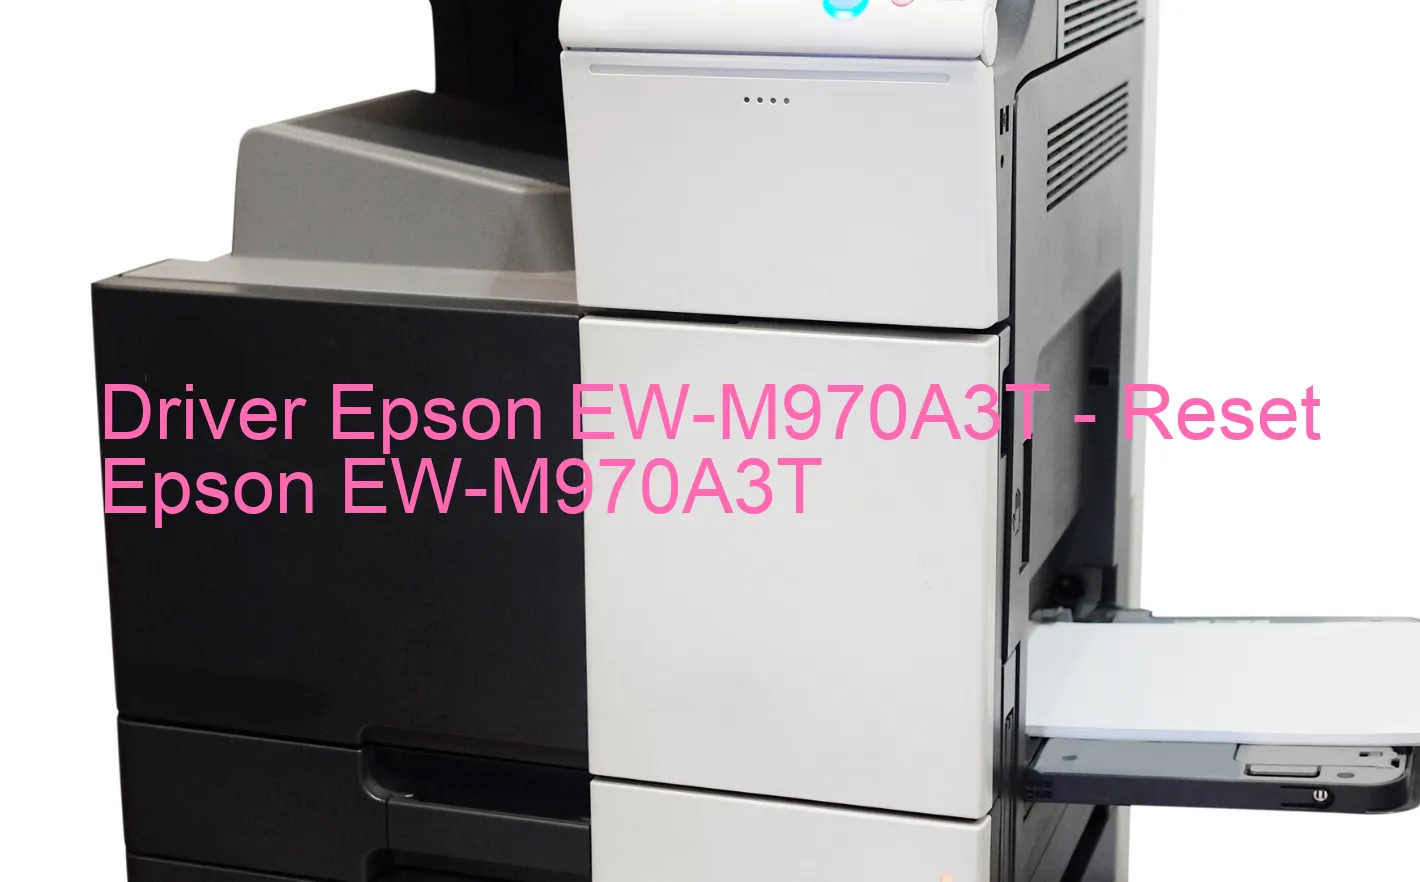 Epson EW-M970A3Tのドライバー、Epson EW-M970A3Tのリセットソフトウェア